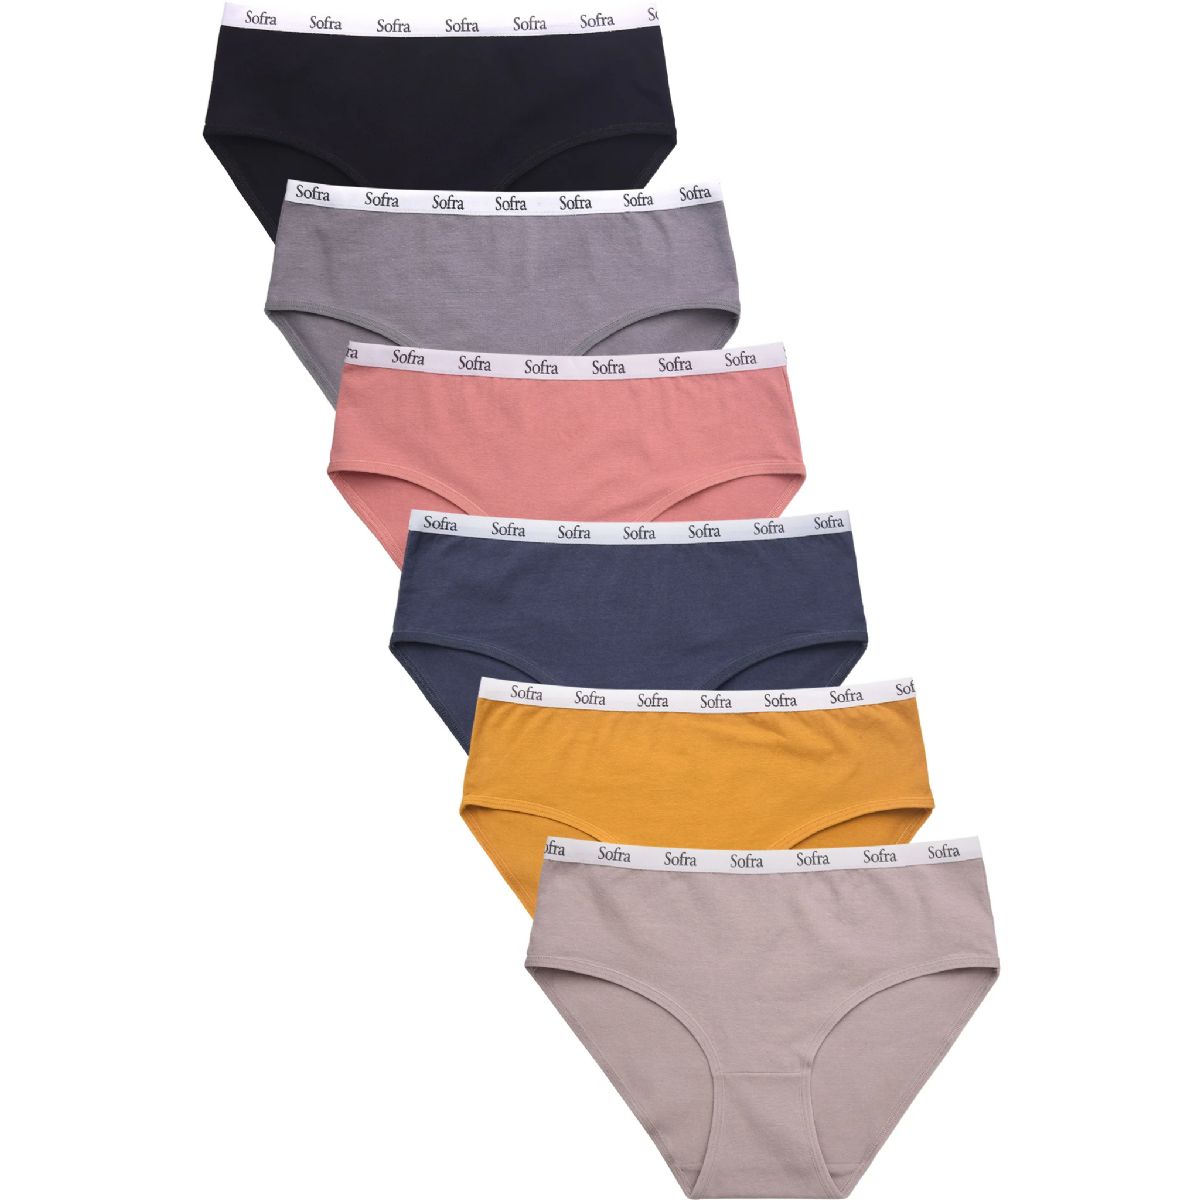 432 Pieces of Sofra Ladies Extended Cotton Bikini Panty